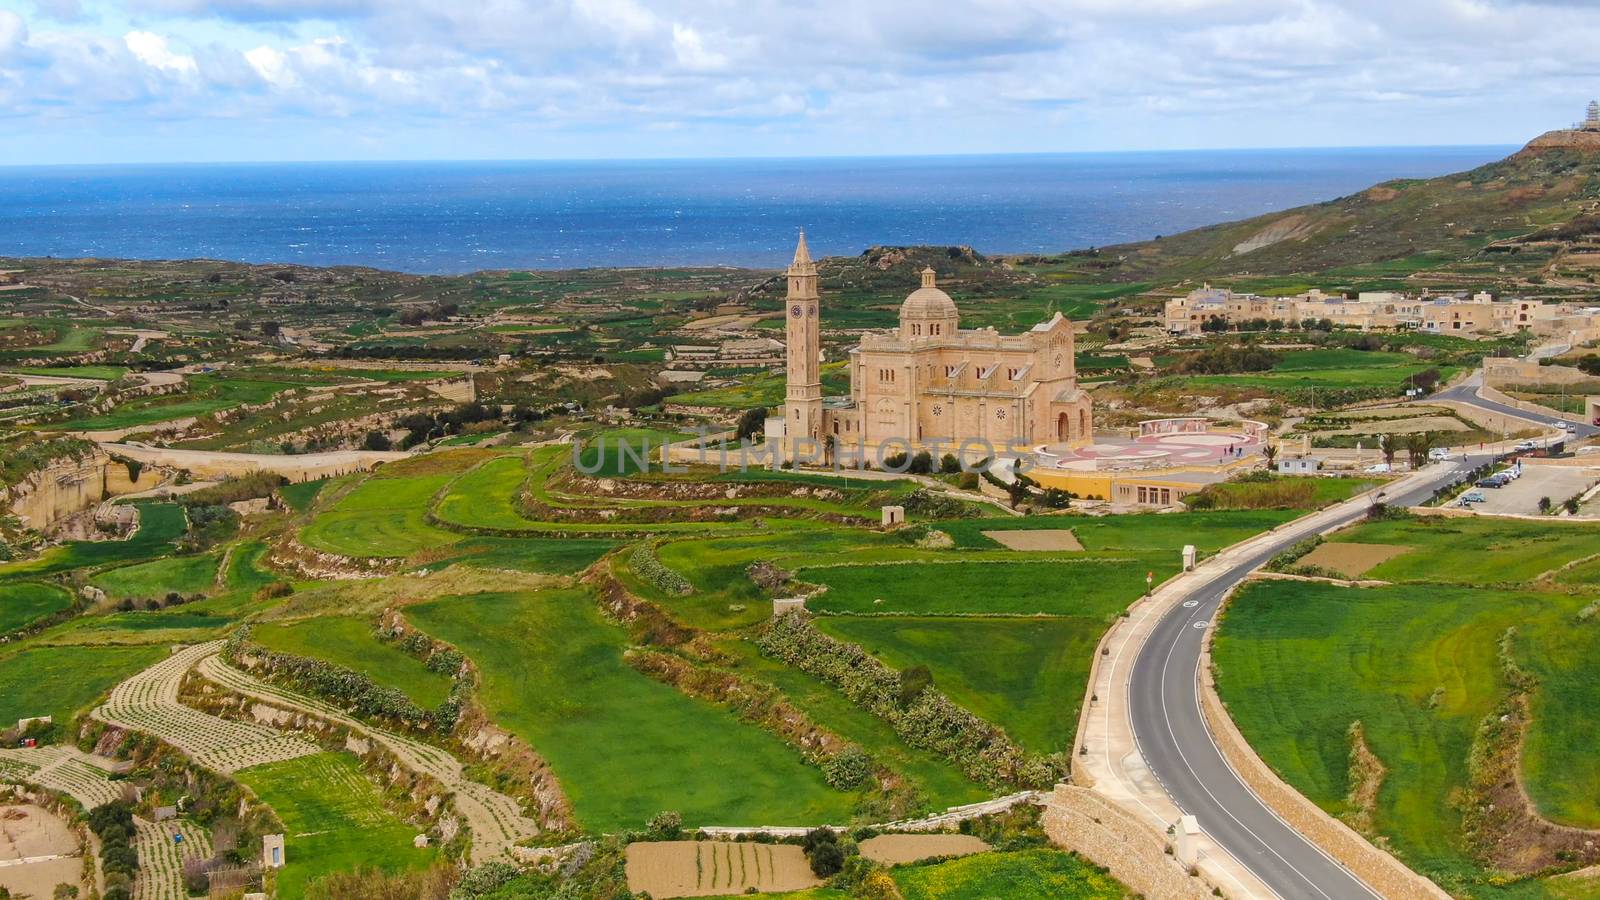 Aerial view over Basilica Ta Pinu in Gozo - a national shrine by Lattwein